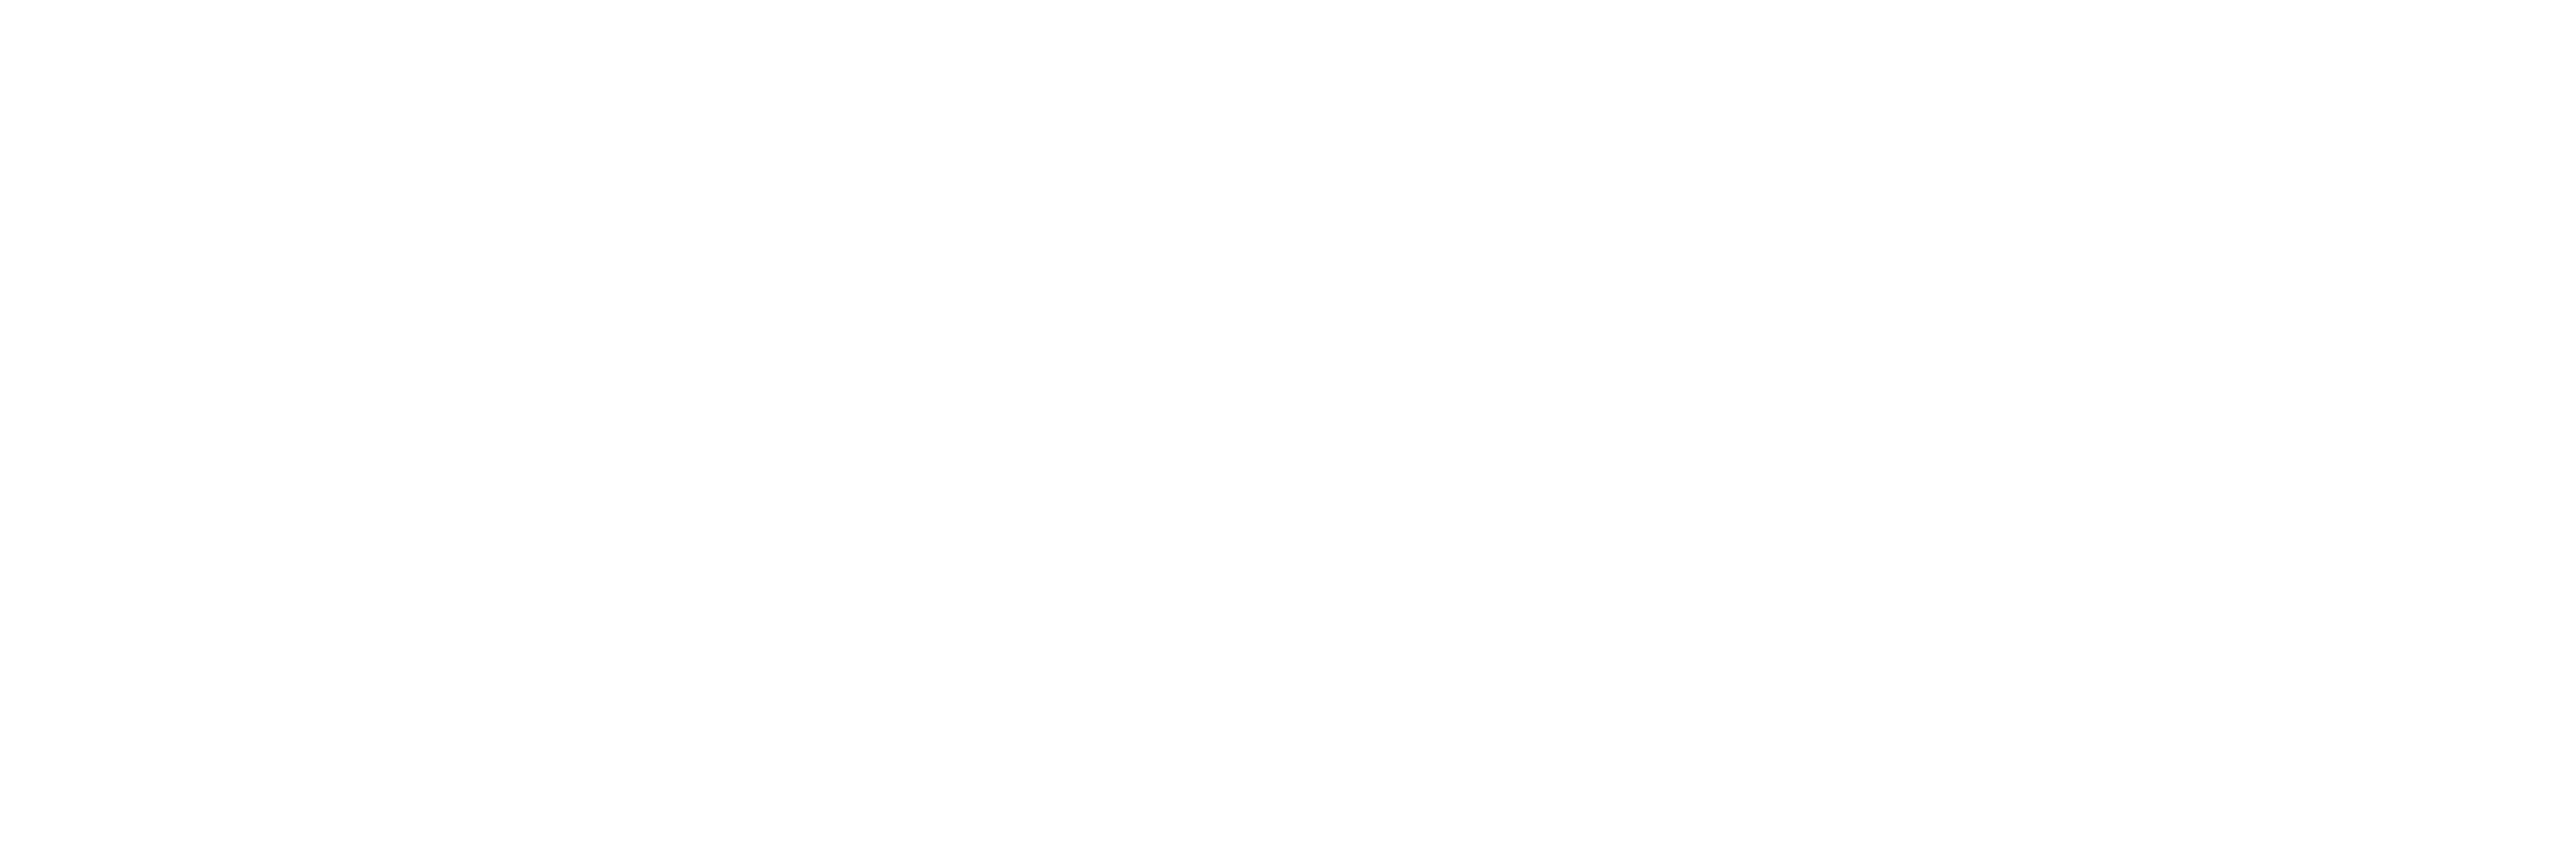 Branding Labo